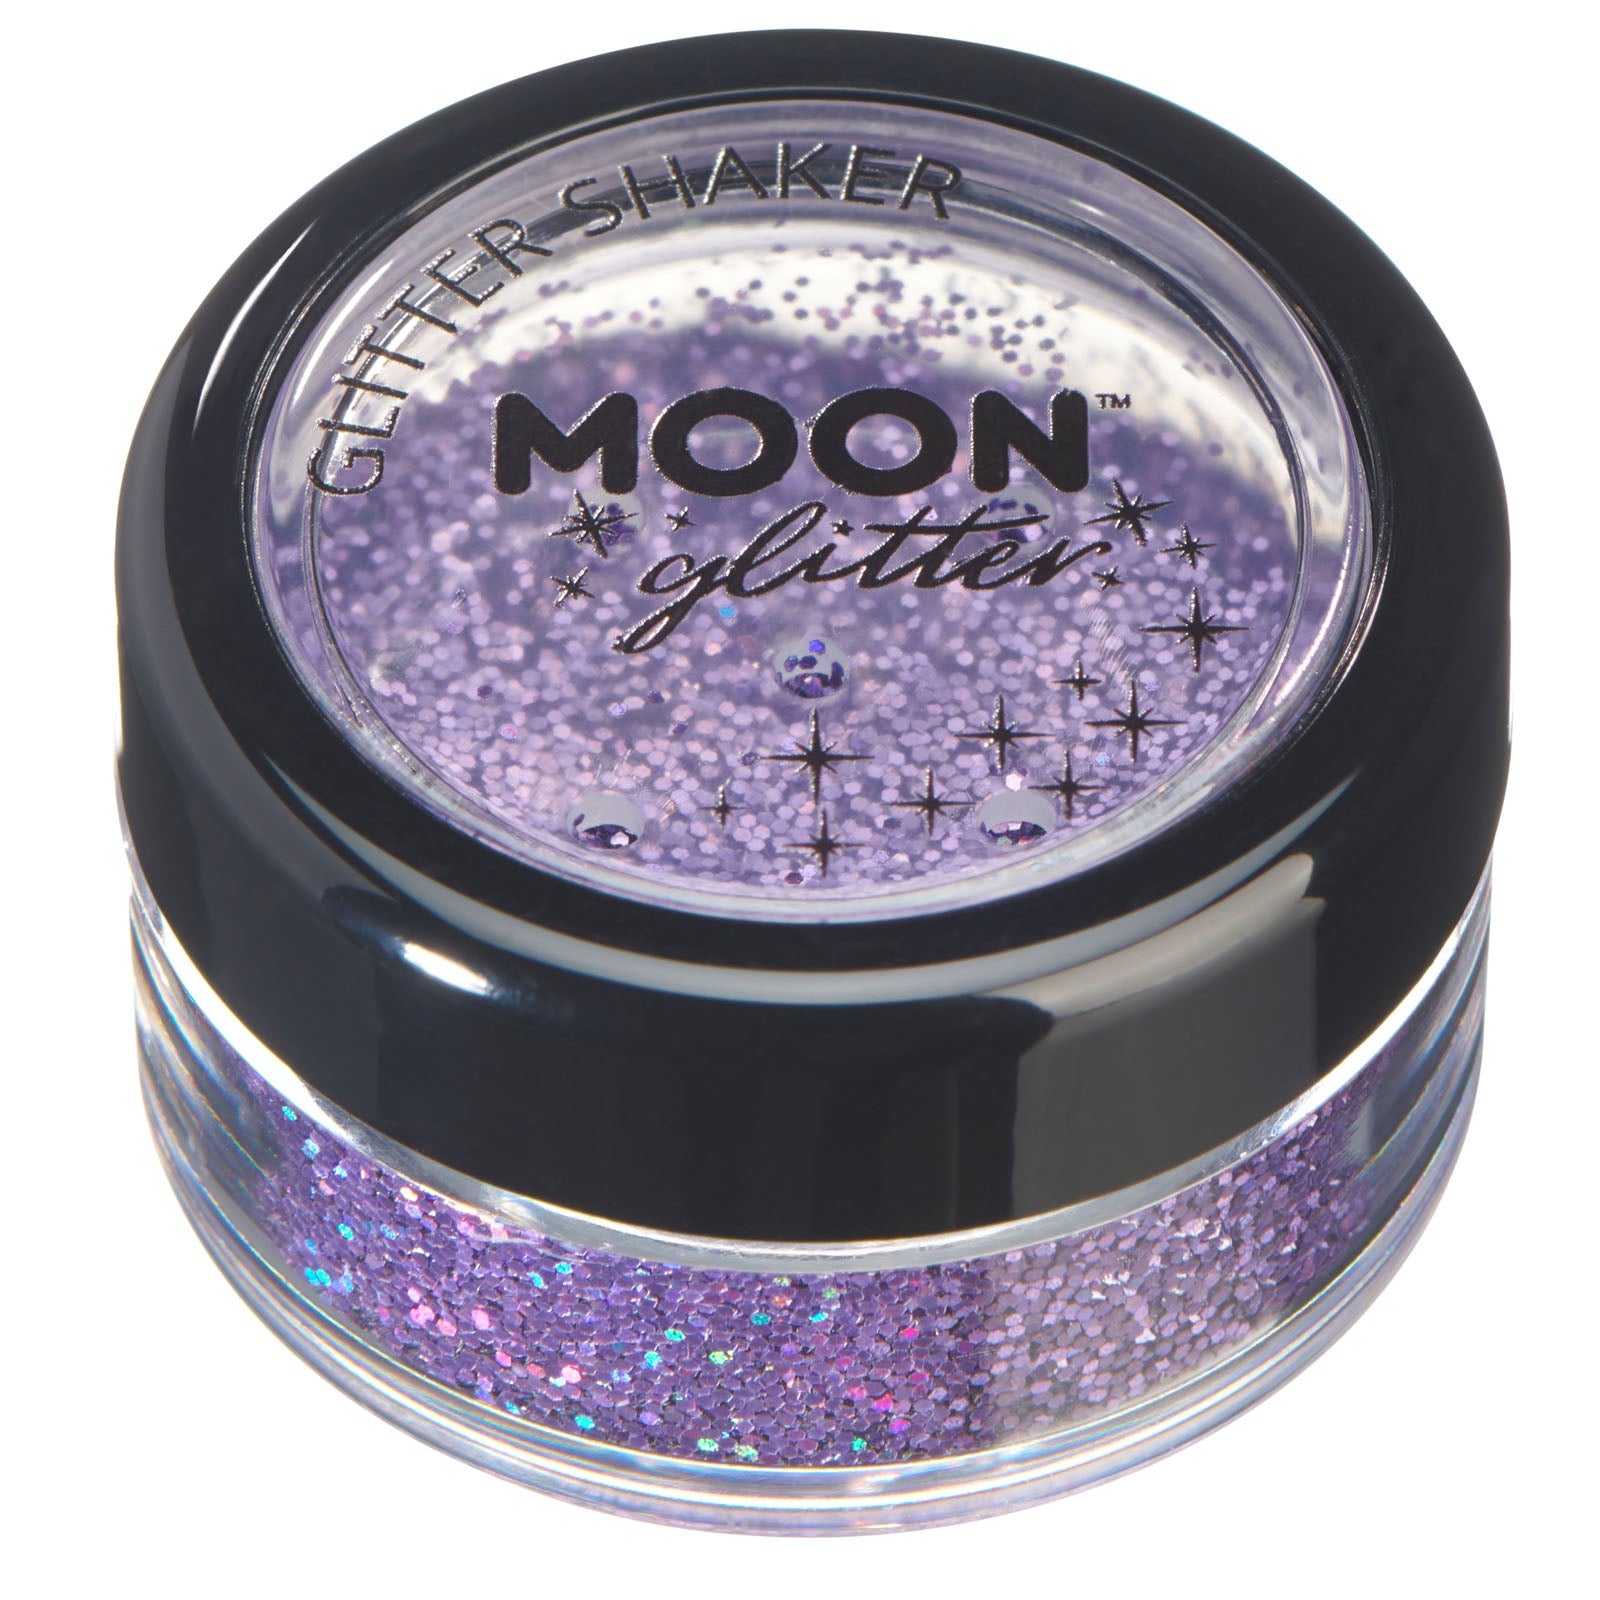 Purple - Holographic Fine Face & Body Glitter Shaker, 5g. Cosmetically certified, FDA & Health Canada compliant, cruelty free and vegan.